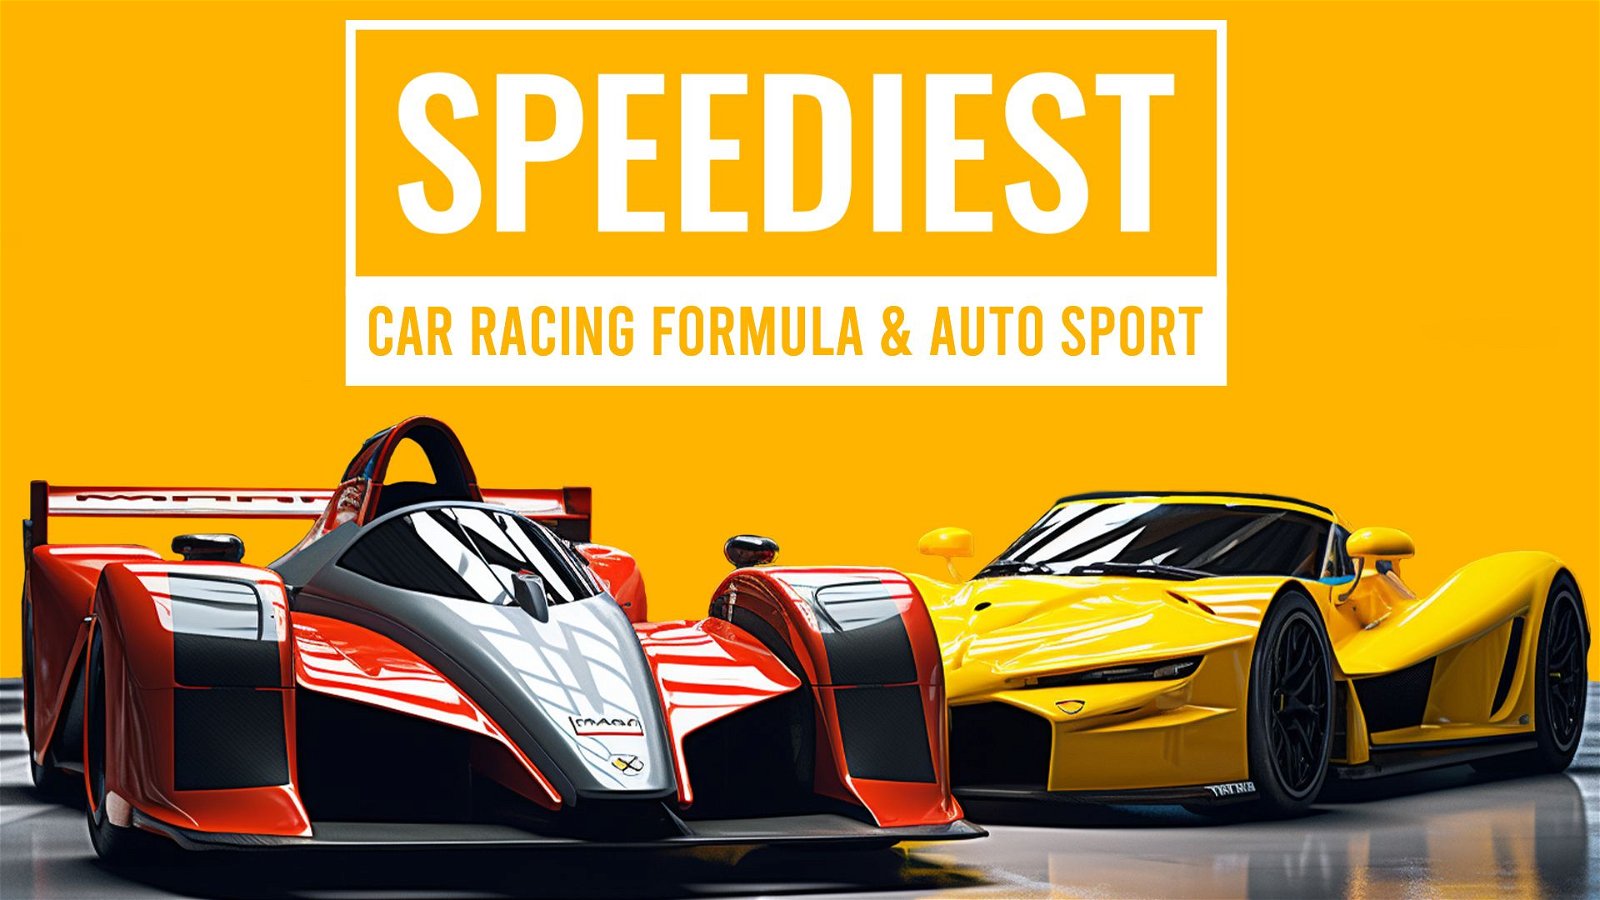 Image of Speediest - Car Racing Formula & Auto Sport